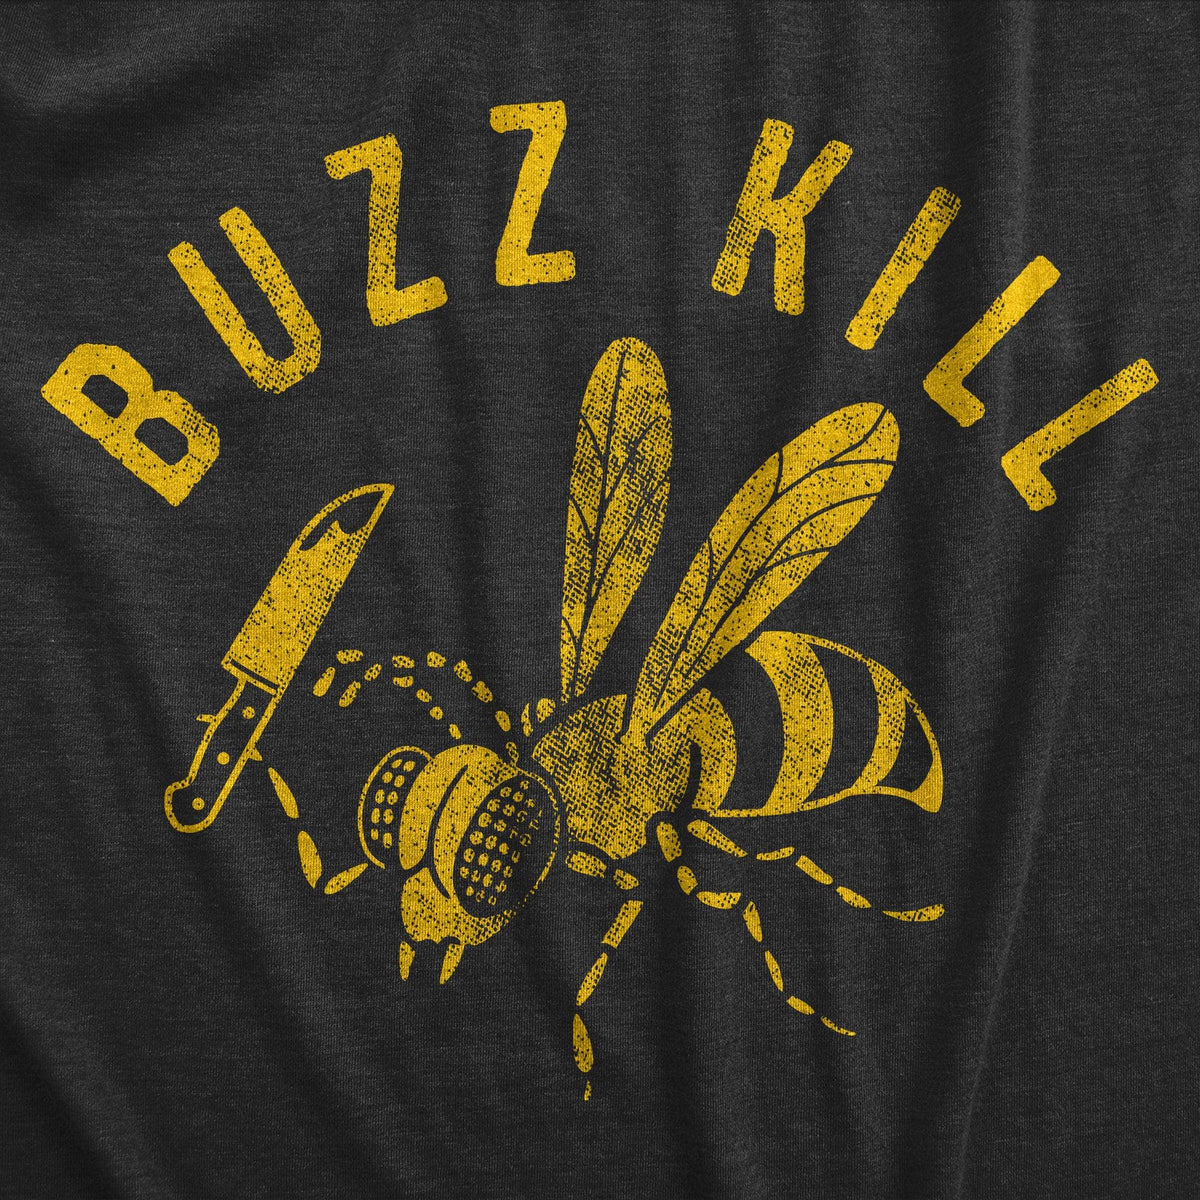 Buzz Kill Women&#39;s Tshirt  -  Crazy Dog T-Shirts